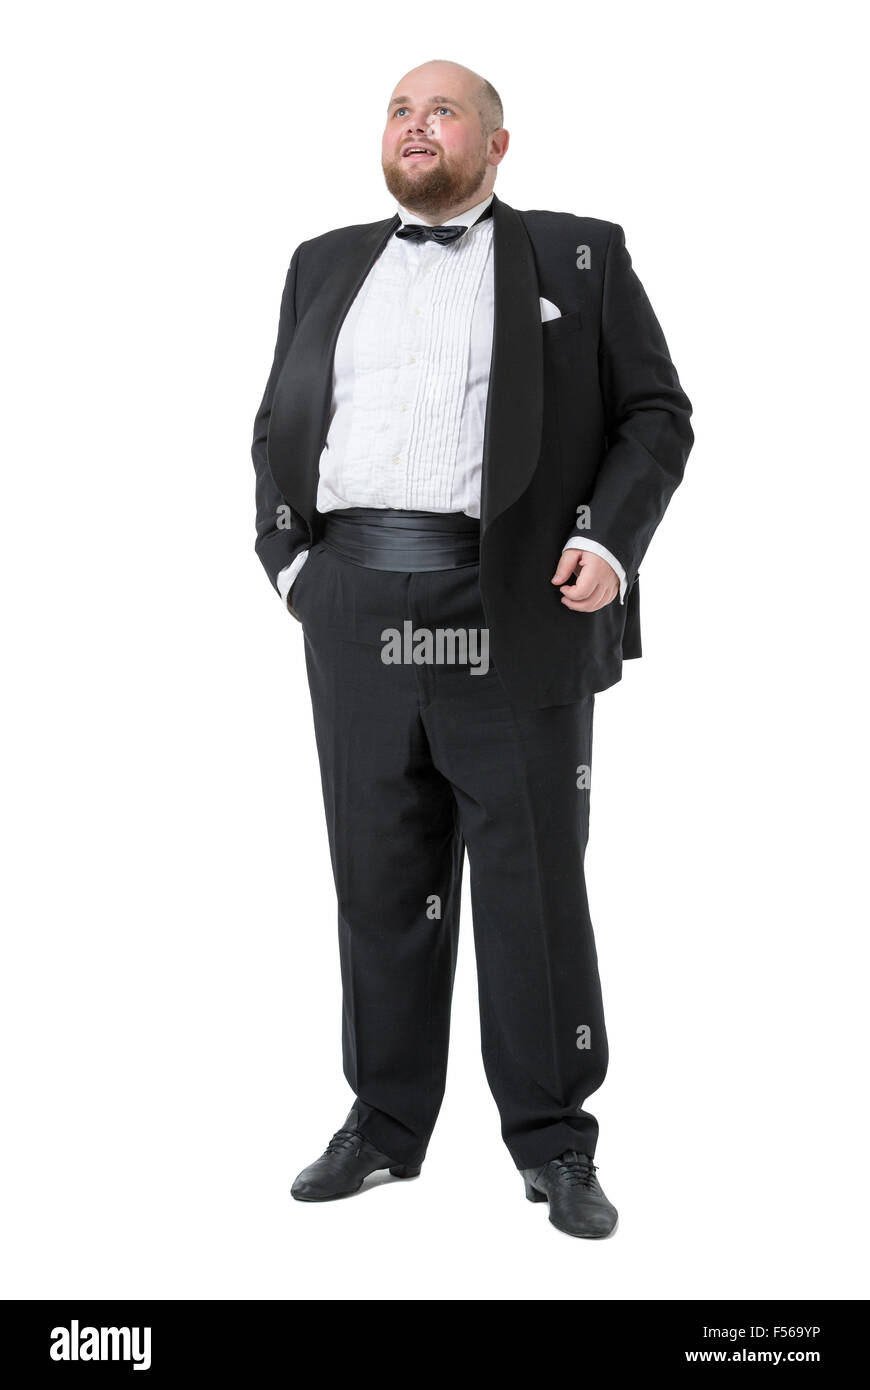 Hombre gordo con fotografías e imágenes de resolución - Alamy